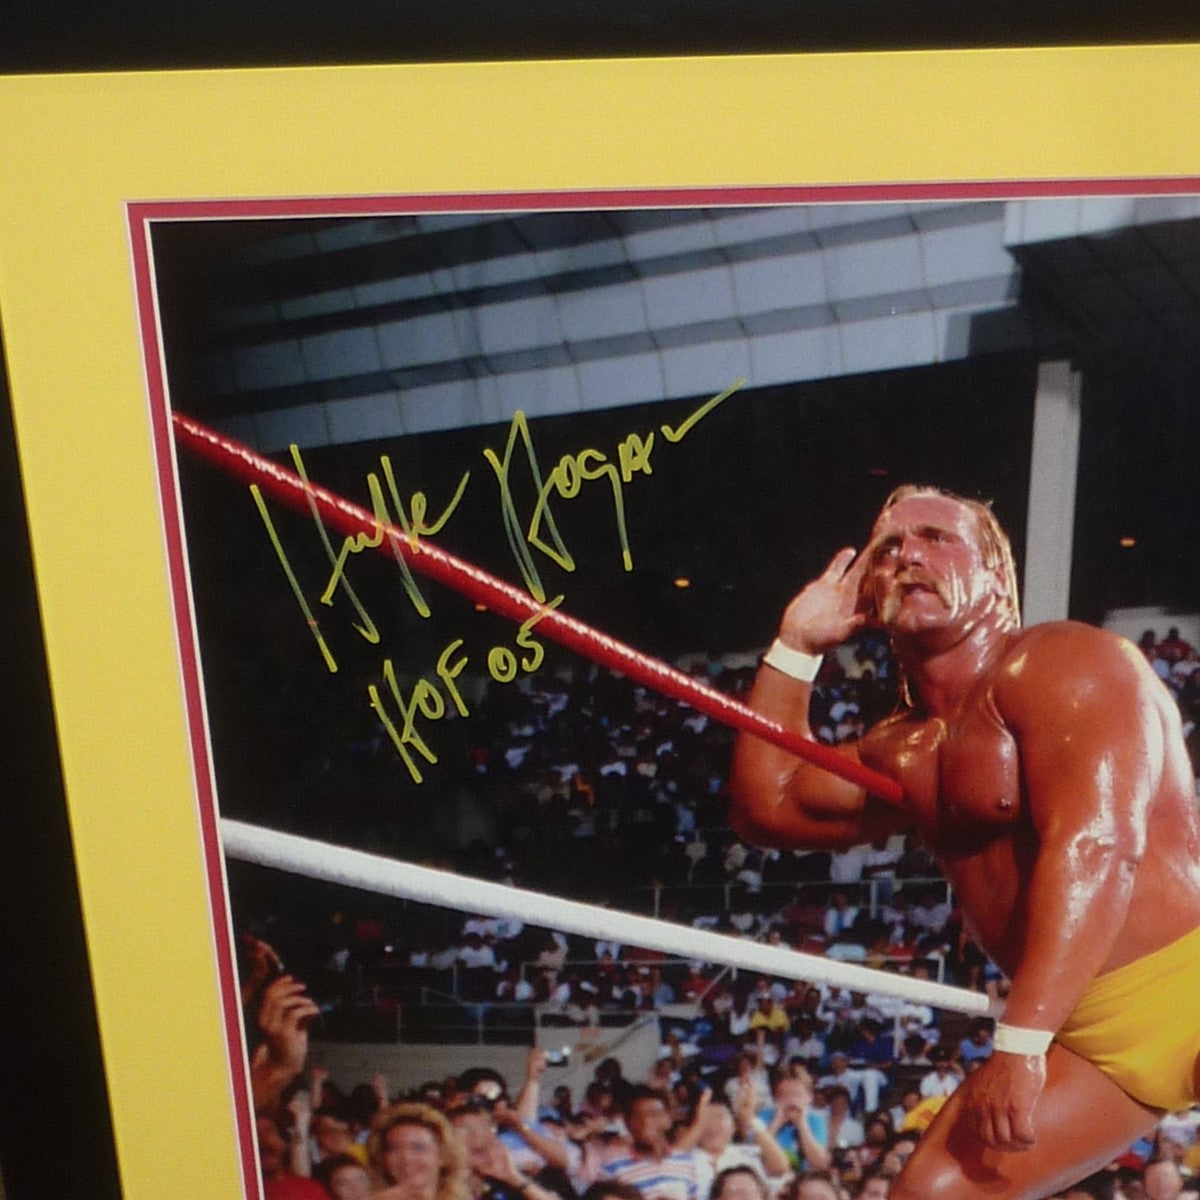 Hulk Hogan Autographed WWE Wrestling Deluxe Framed 20x24 Classic Photo w/ "HOF" - JSA